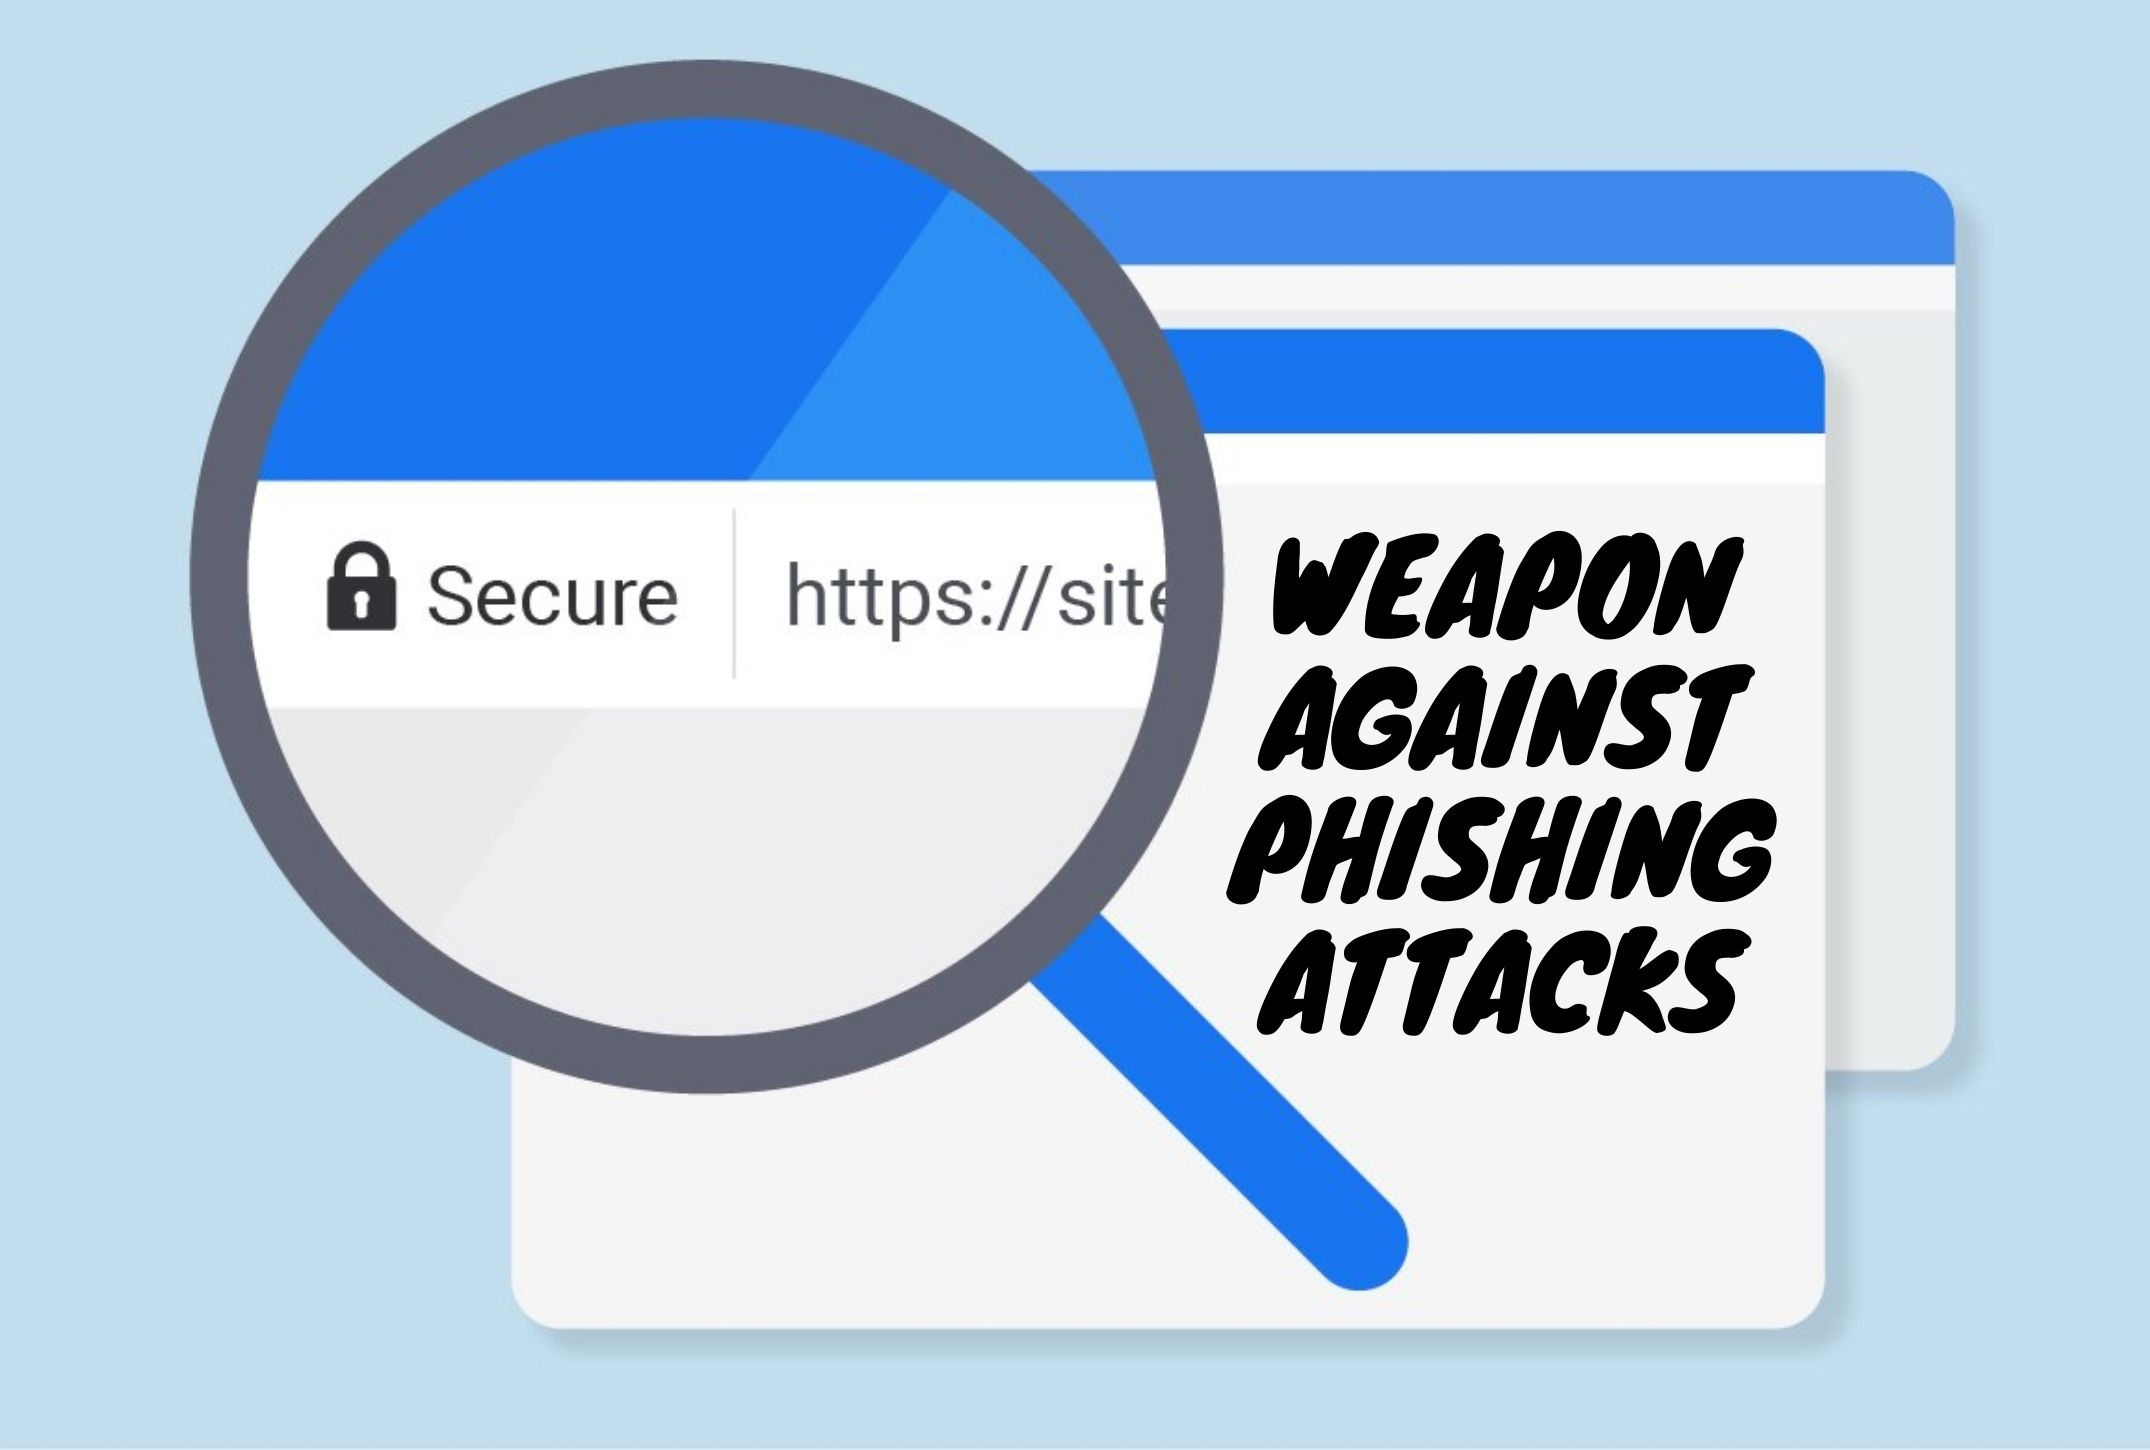 Weapon against Phishing Attacks